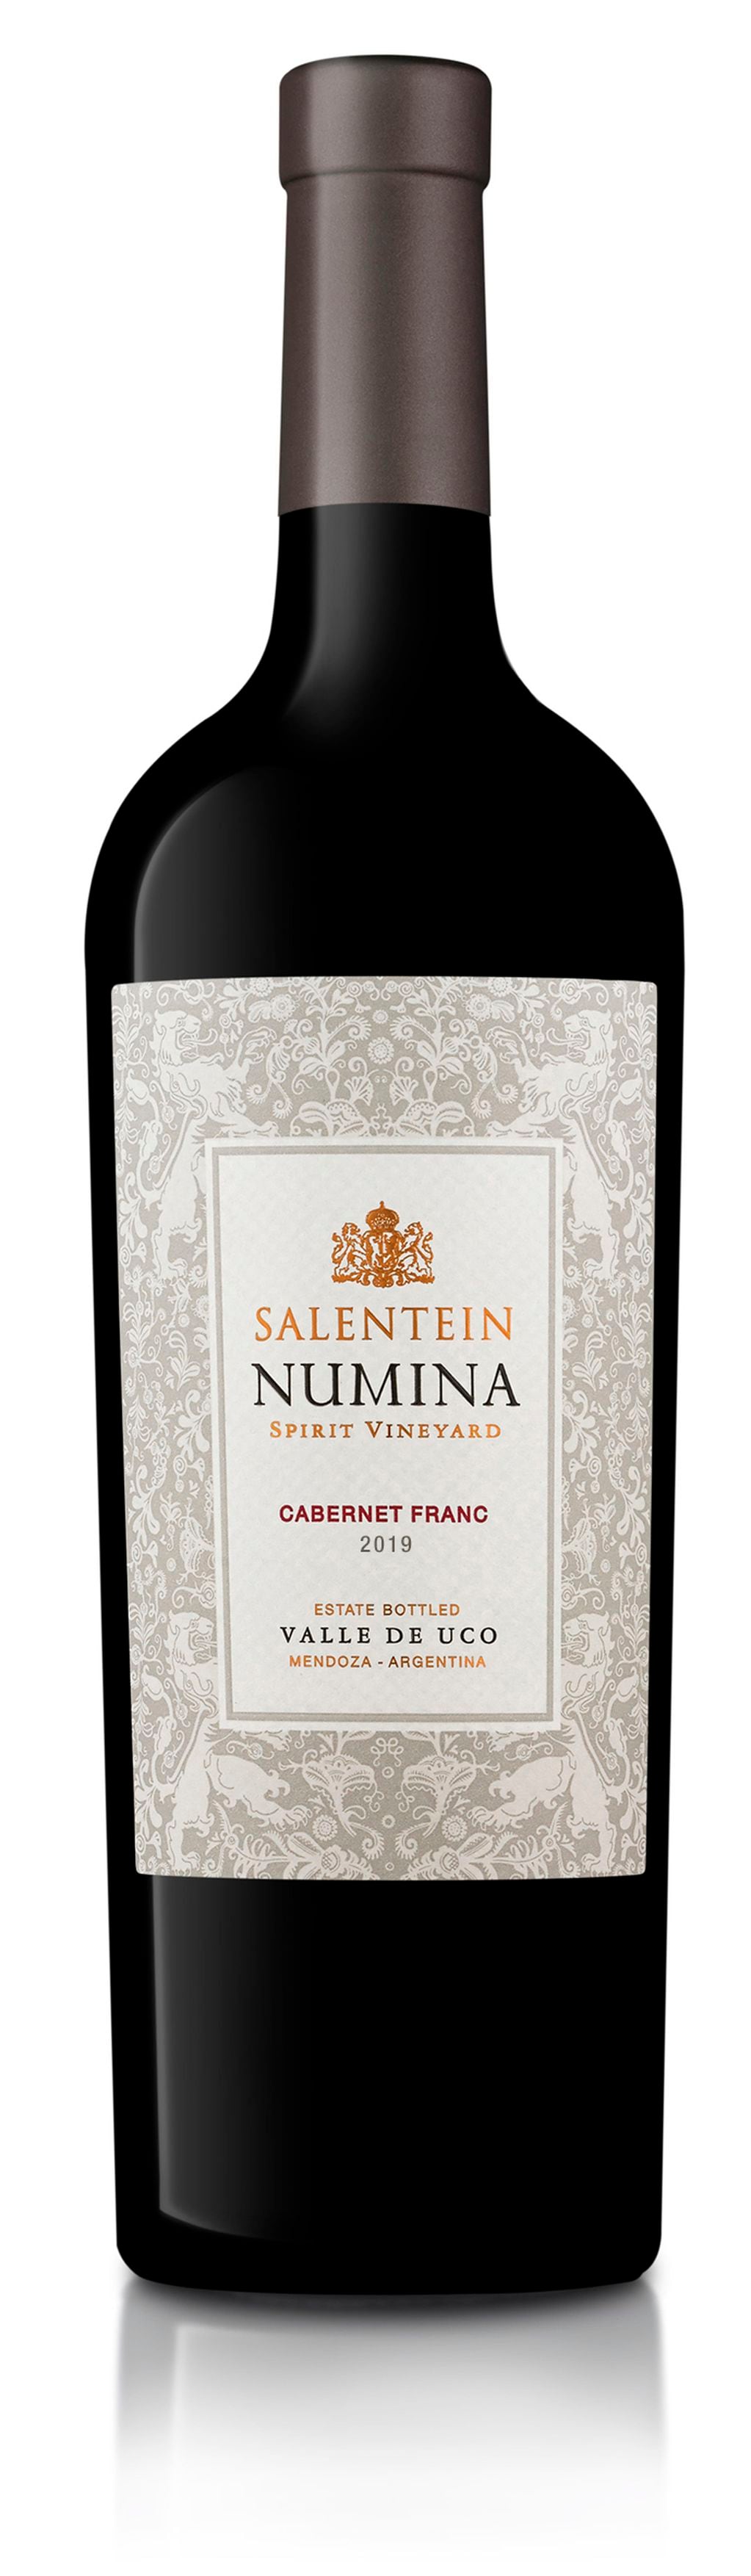 Salentein Numina Cabernet Franc 2019 se consagró como el mejor vino de Argentina. - Gentileza